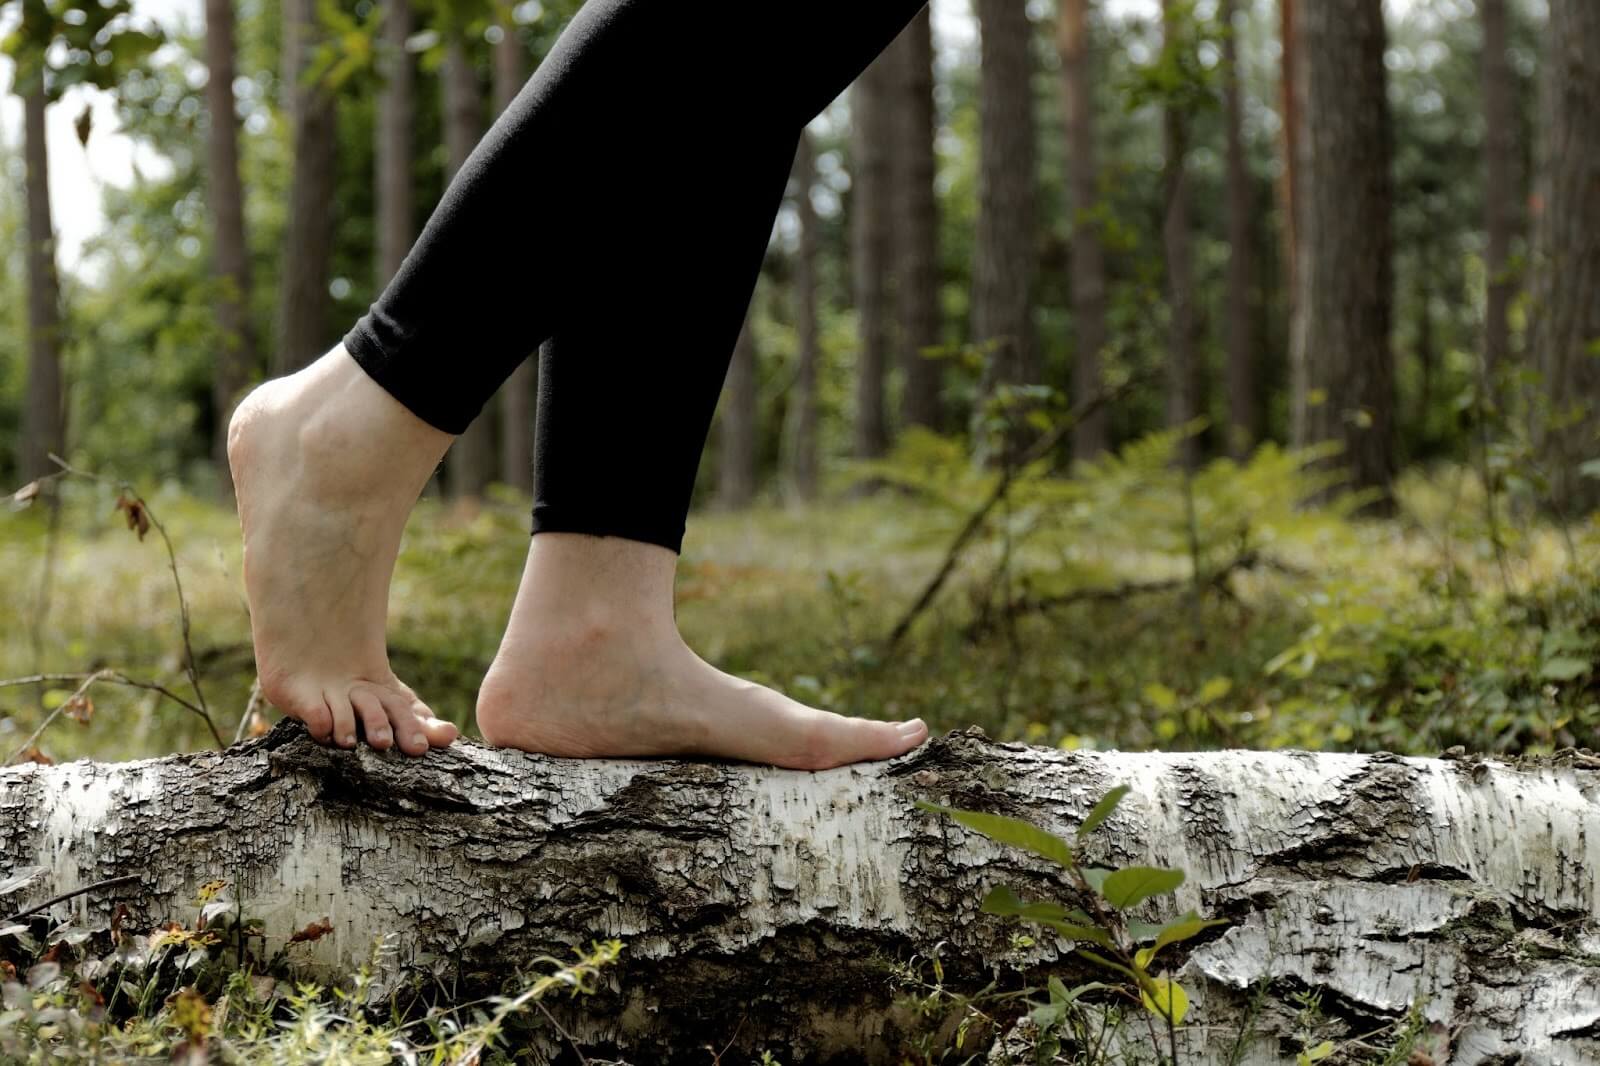 Xero Shoes: onto the barefoot way